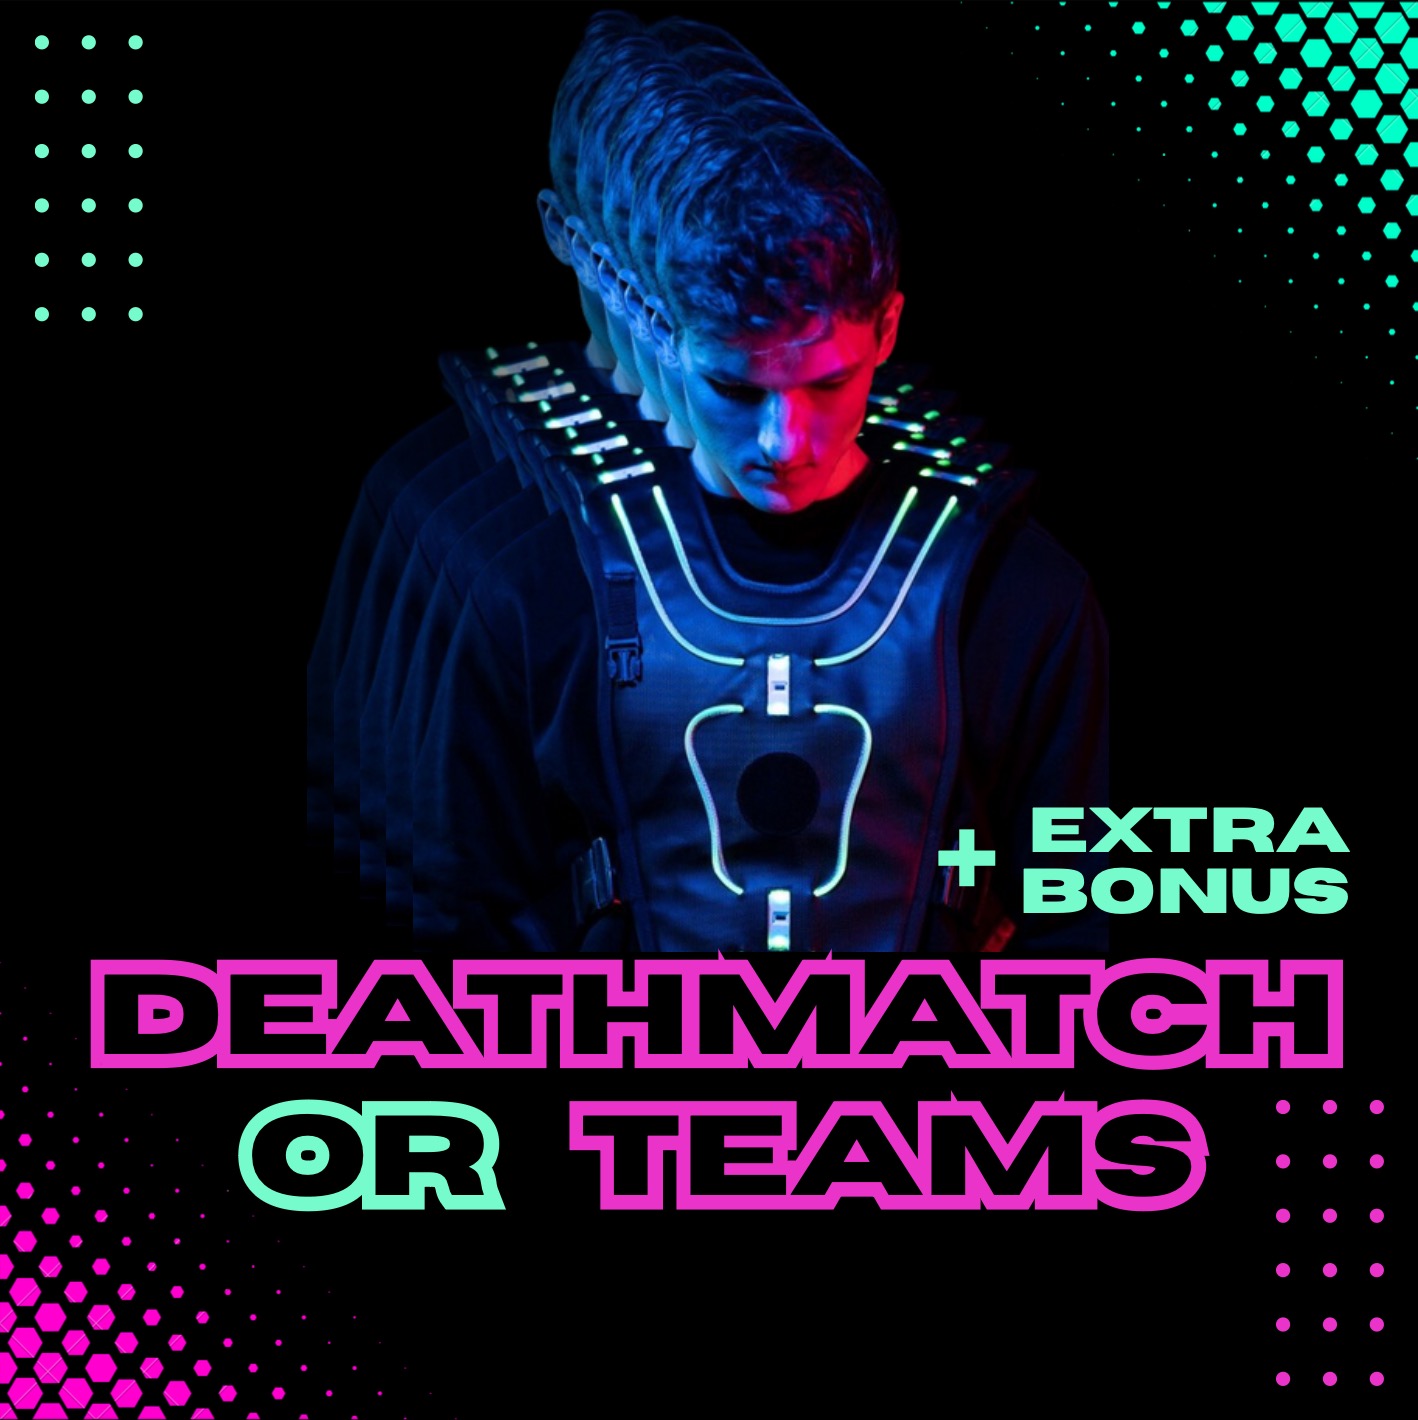 Deathmatch or Teams